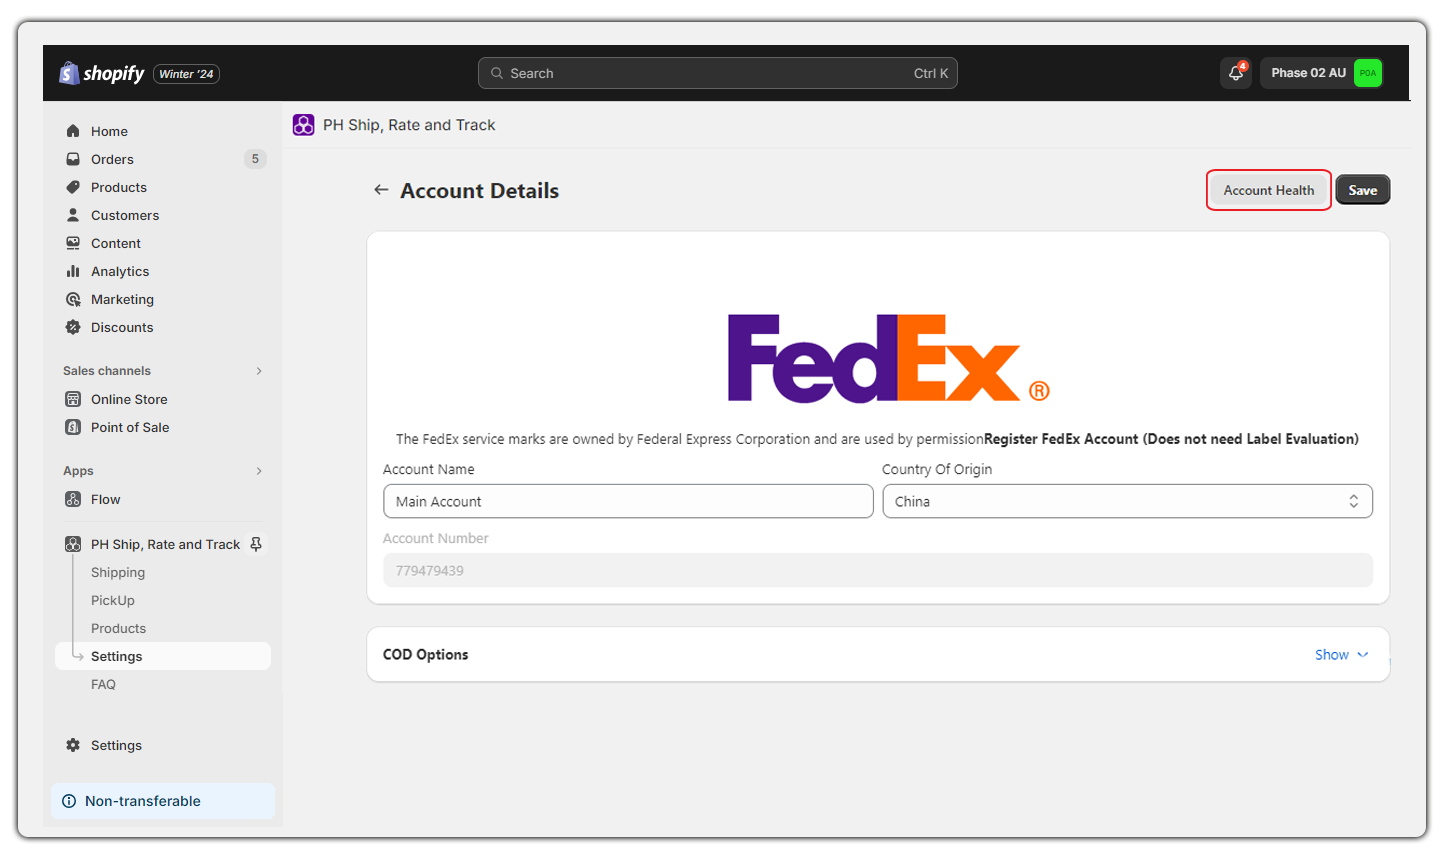 fedex address validation